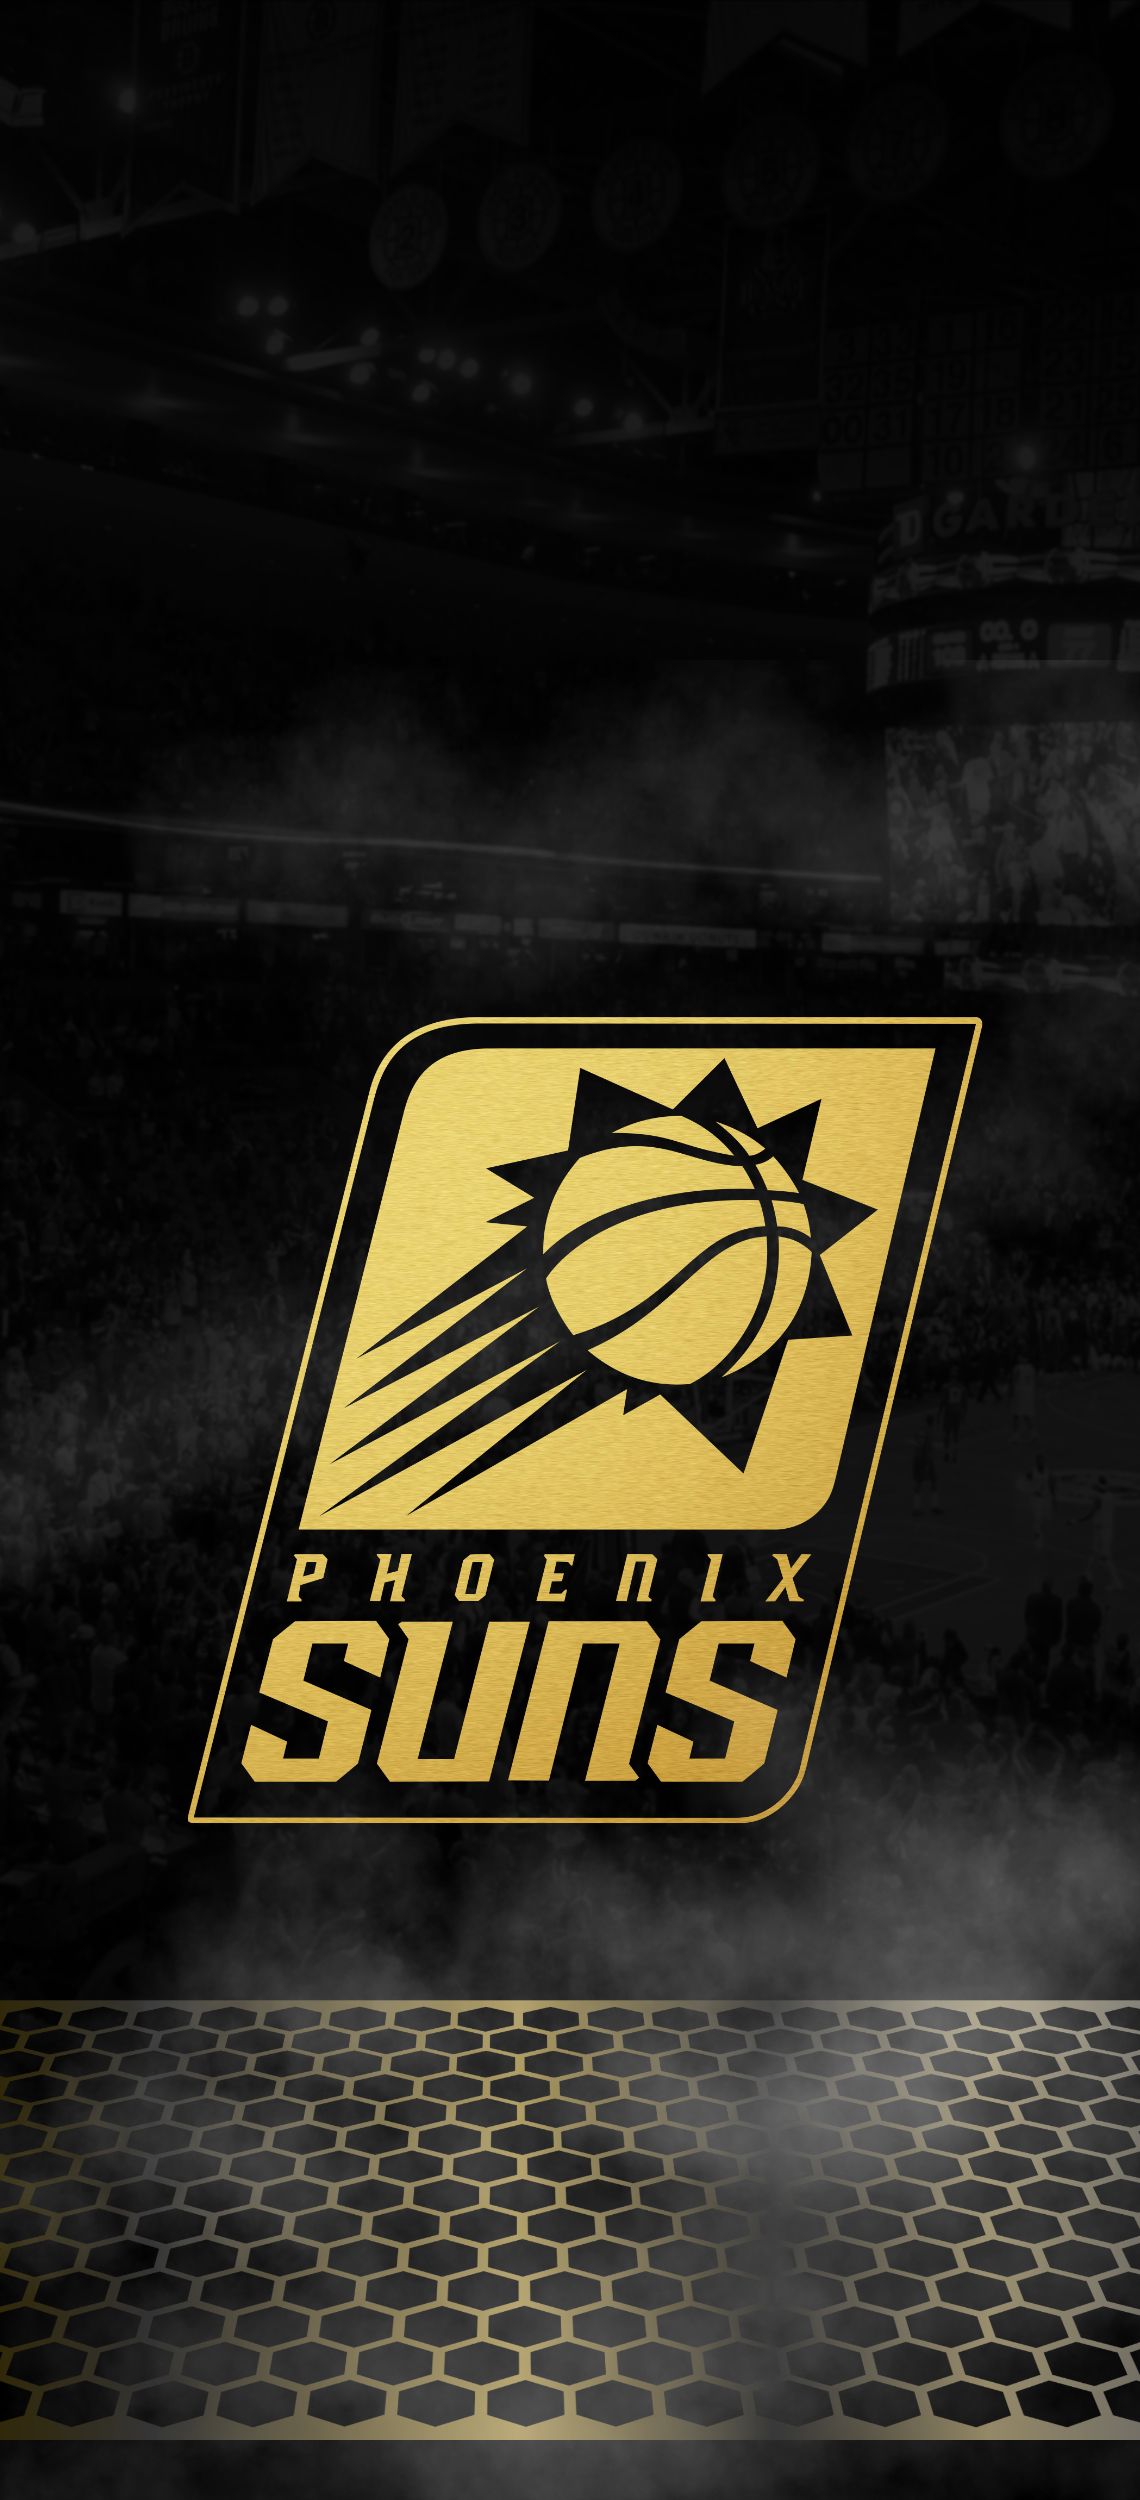 Phoenix Suns Wallpaper Background. Phoenix suns, Basketball wallpaper, Phoenix basketball